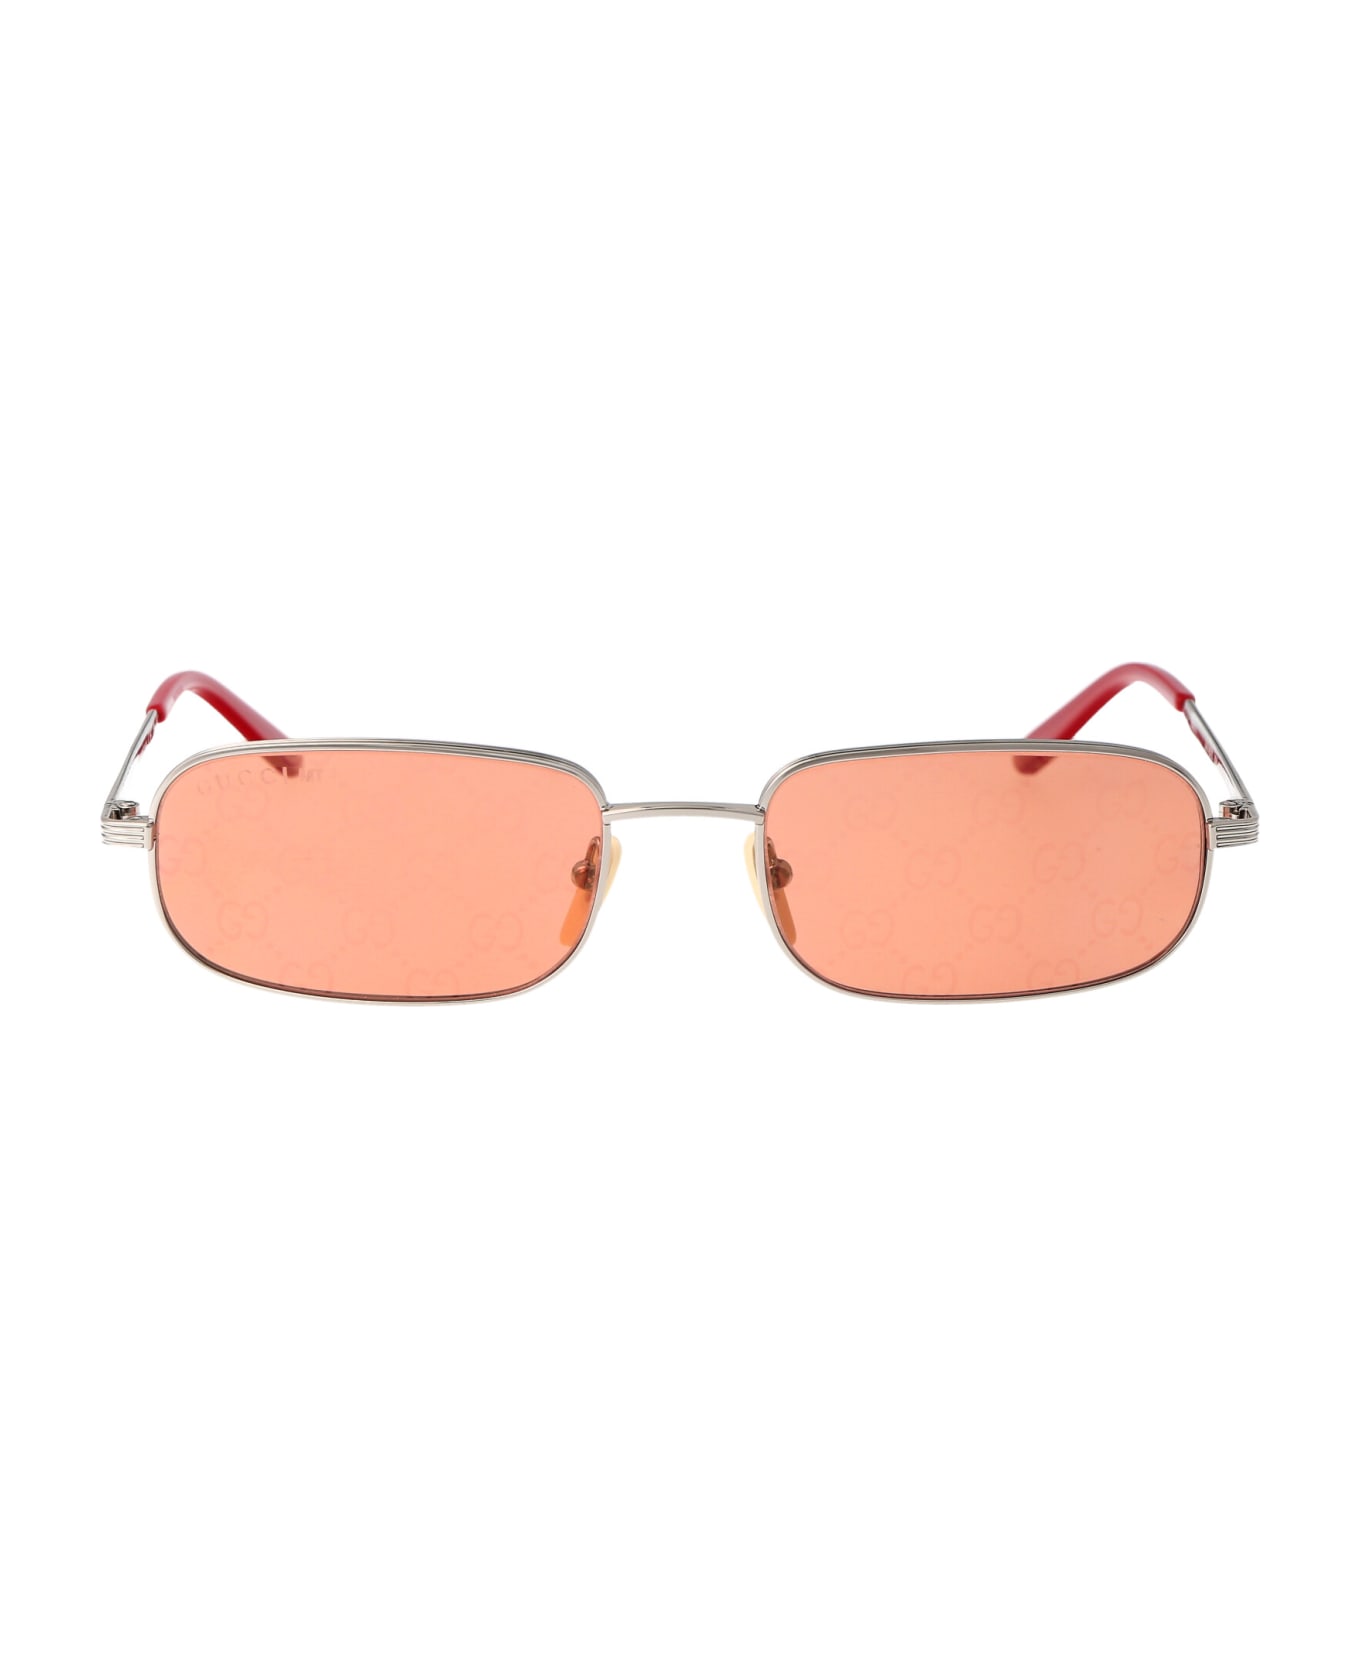 Gucci Eyewear Gg1457s Sunglasses - 004 SILVER SILVER RED